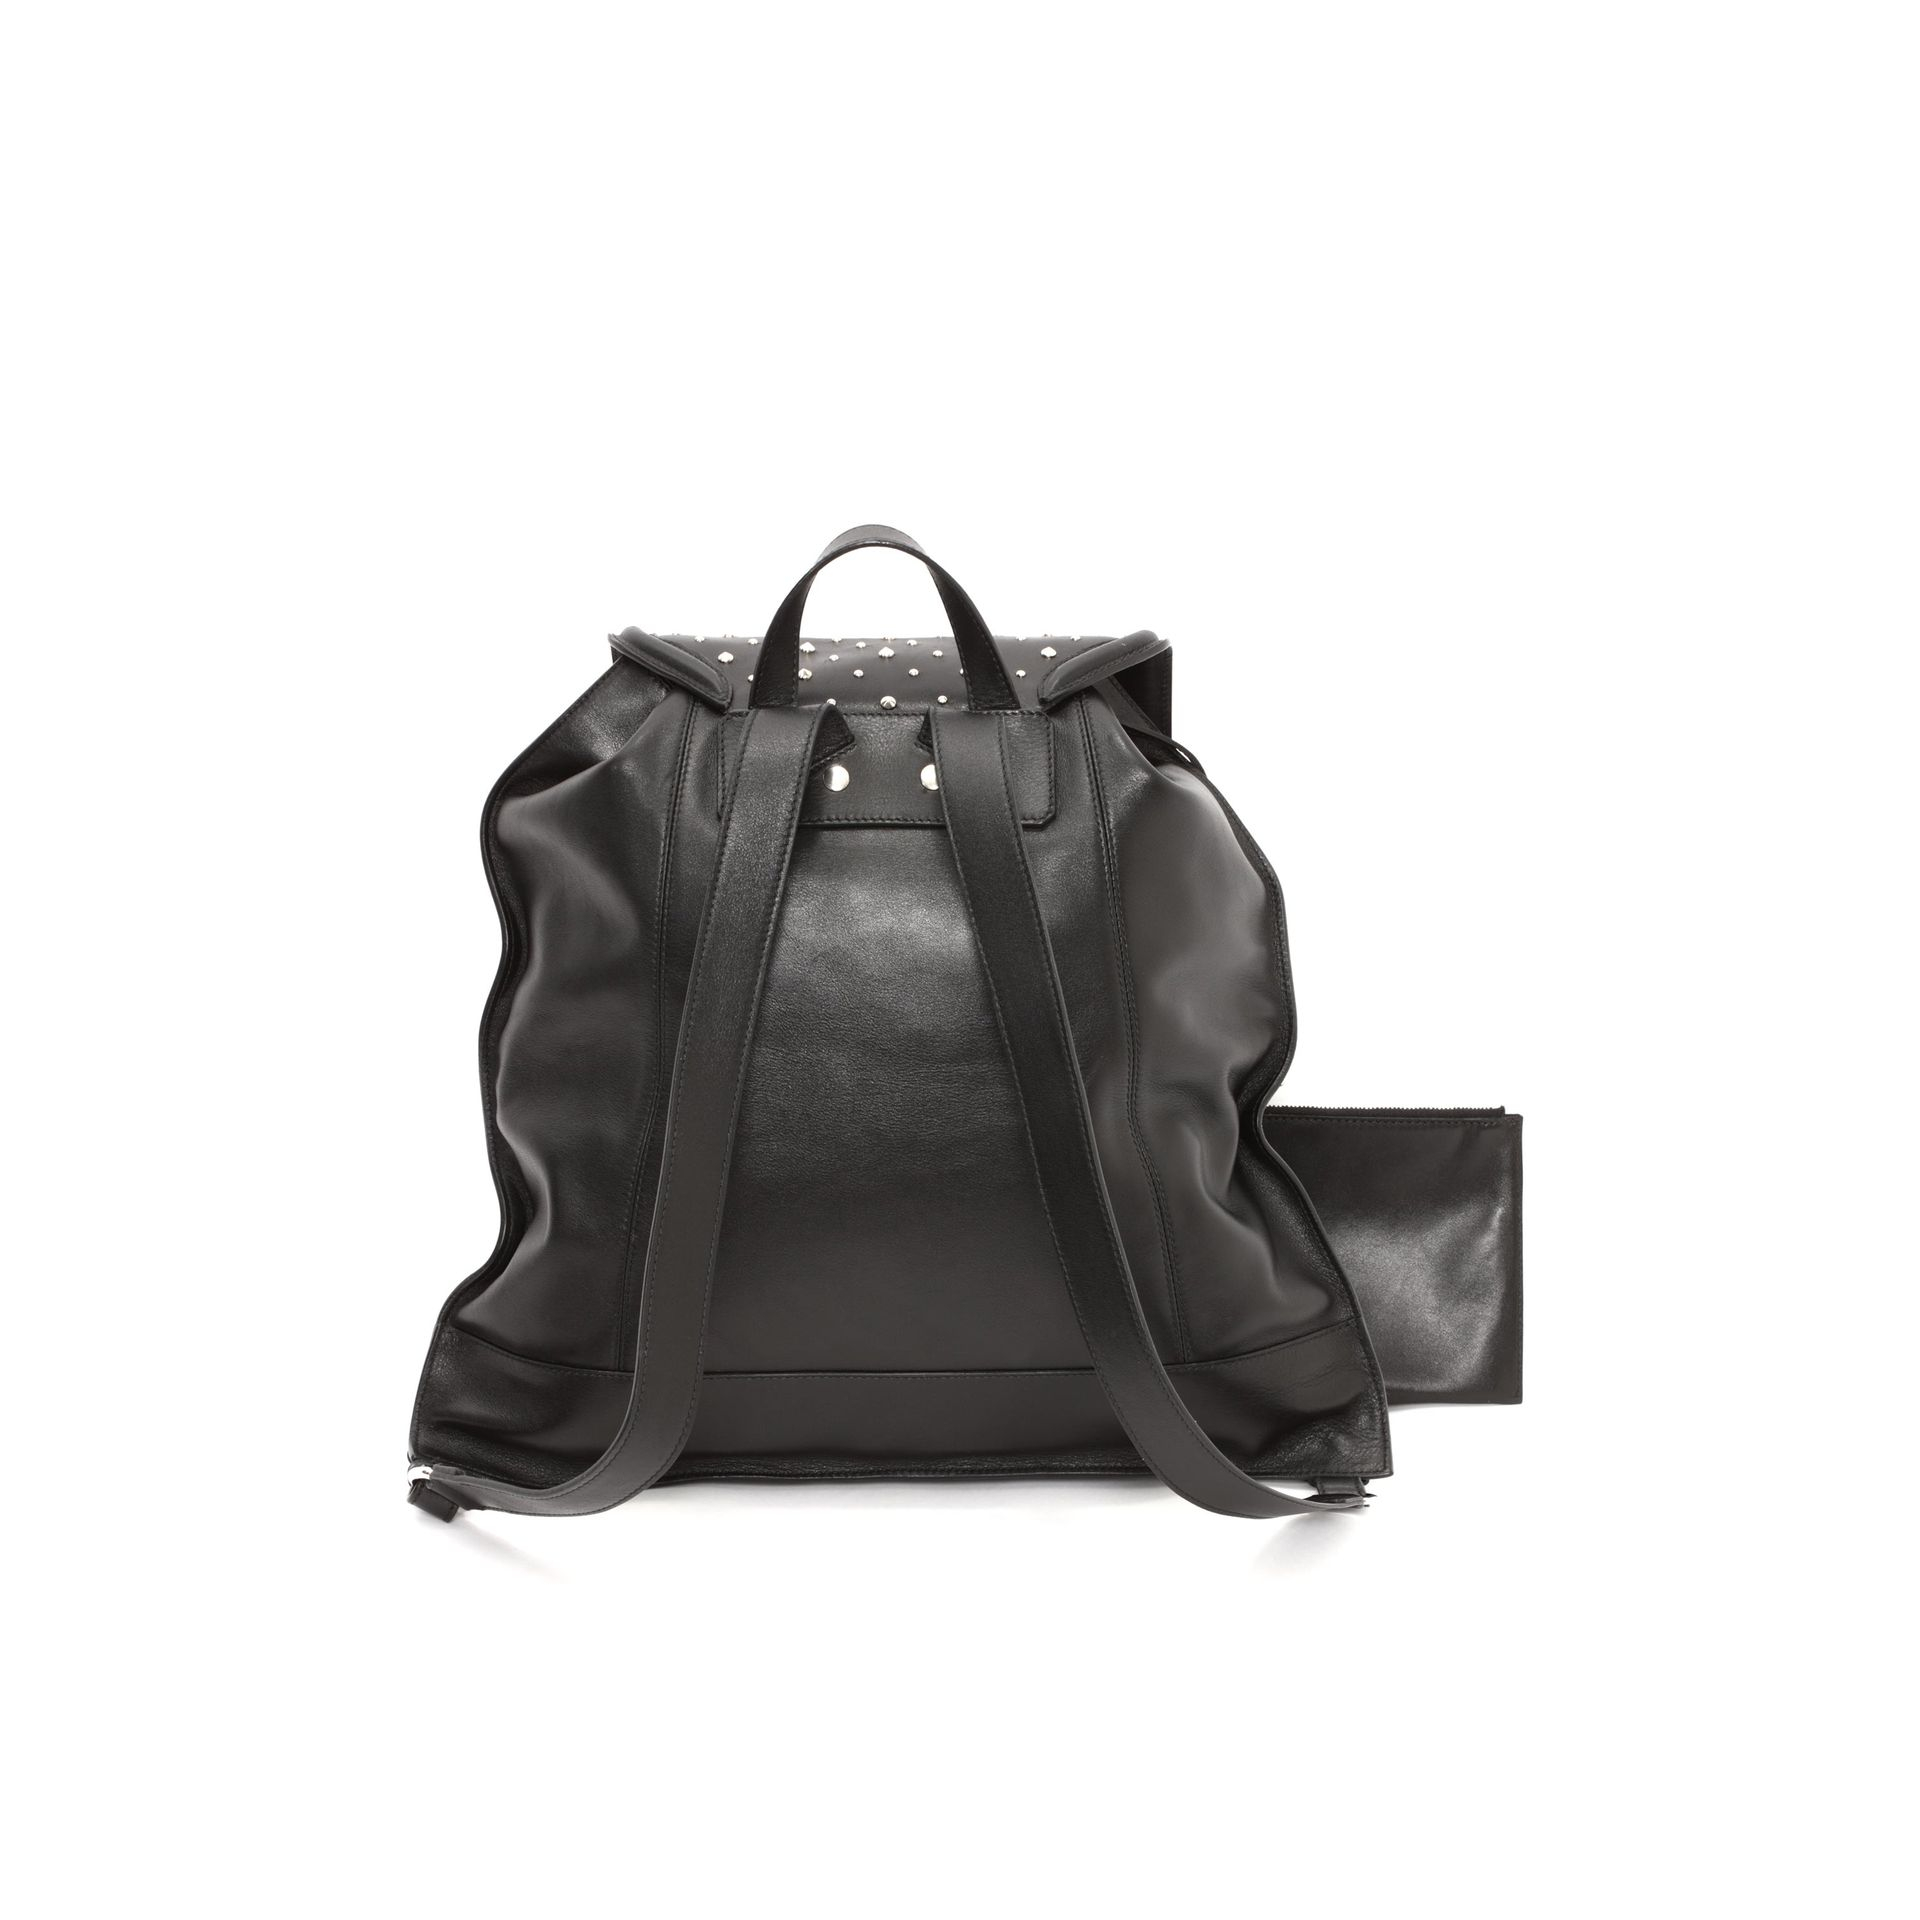 Alexander McQueen Studded Leather Skull Padlock Backpack in Black - Lyst